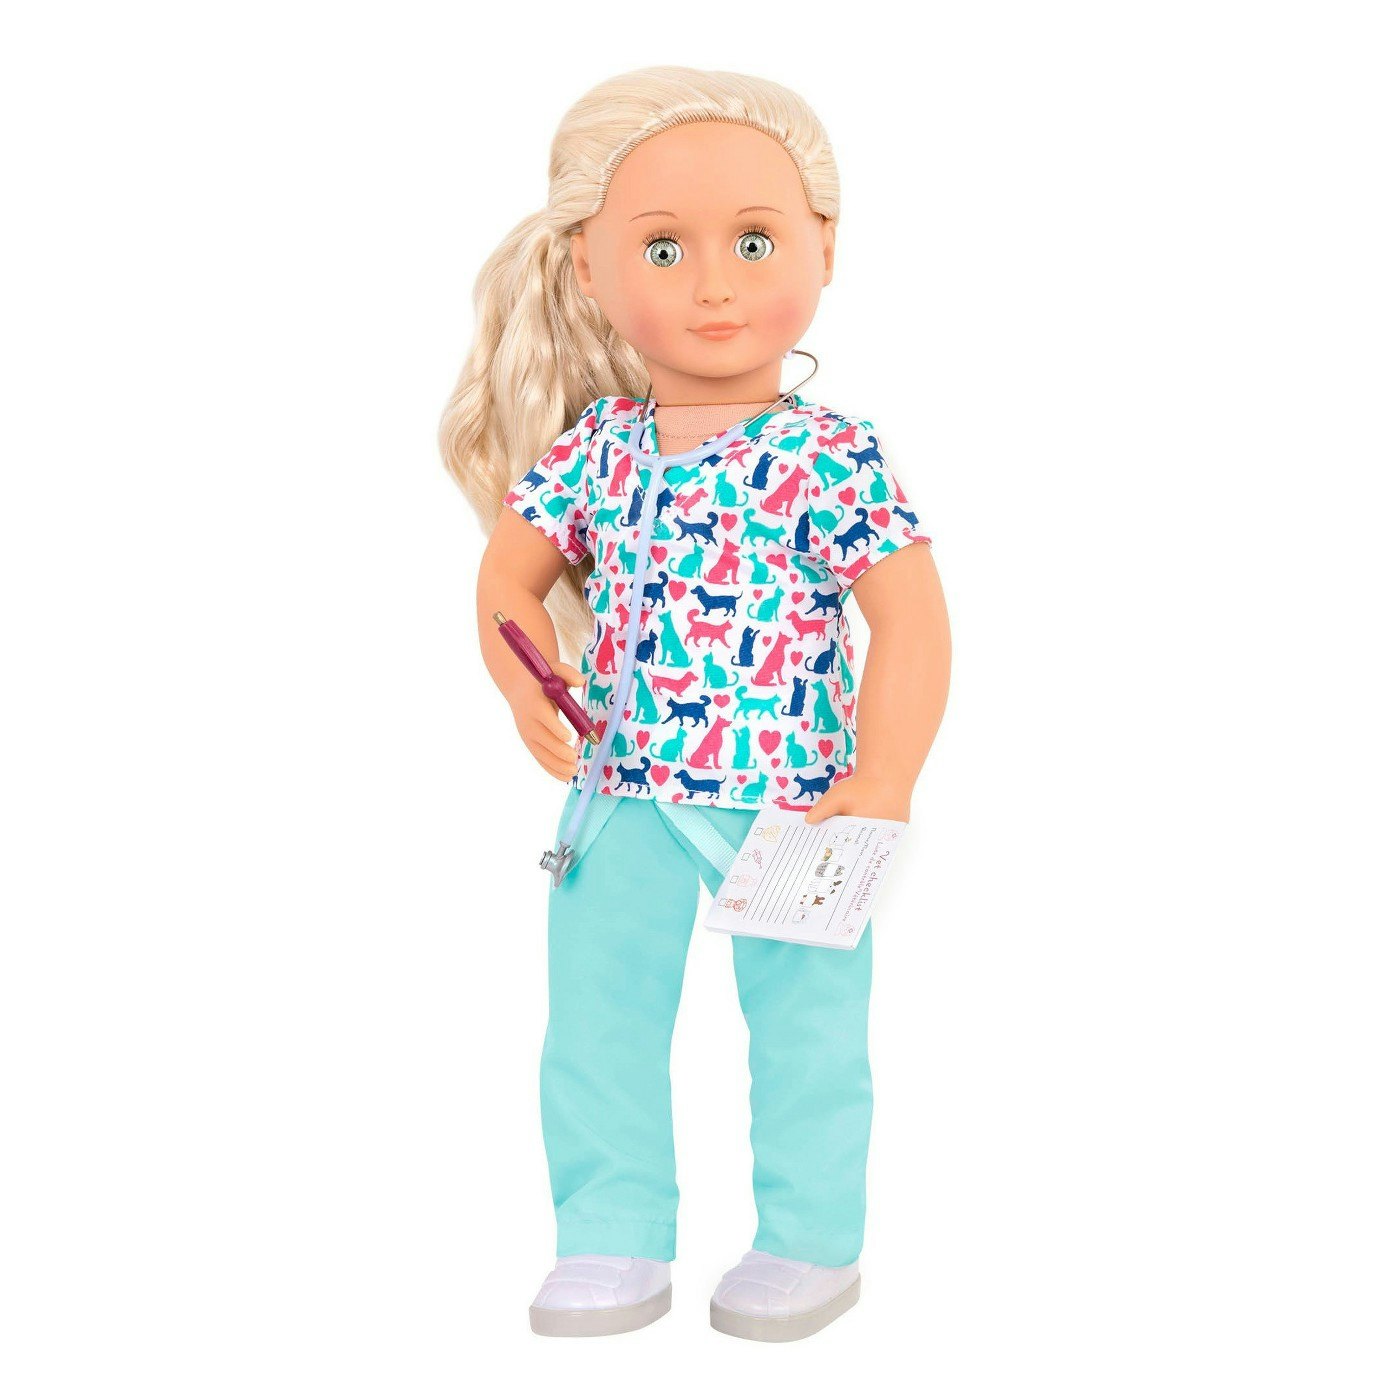 target version of american girl doll